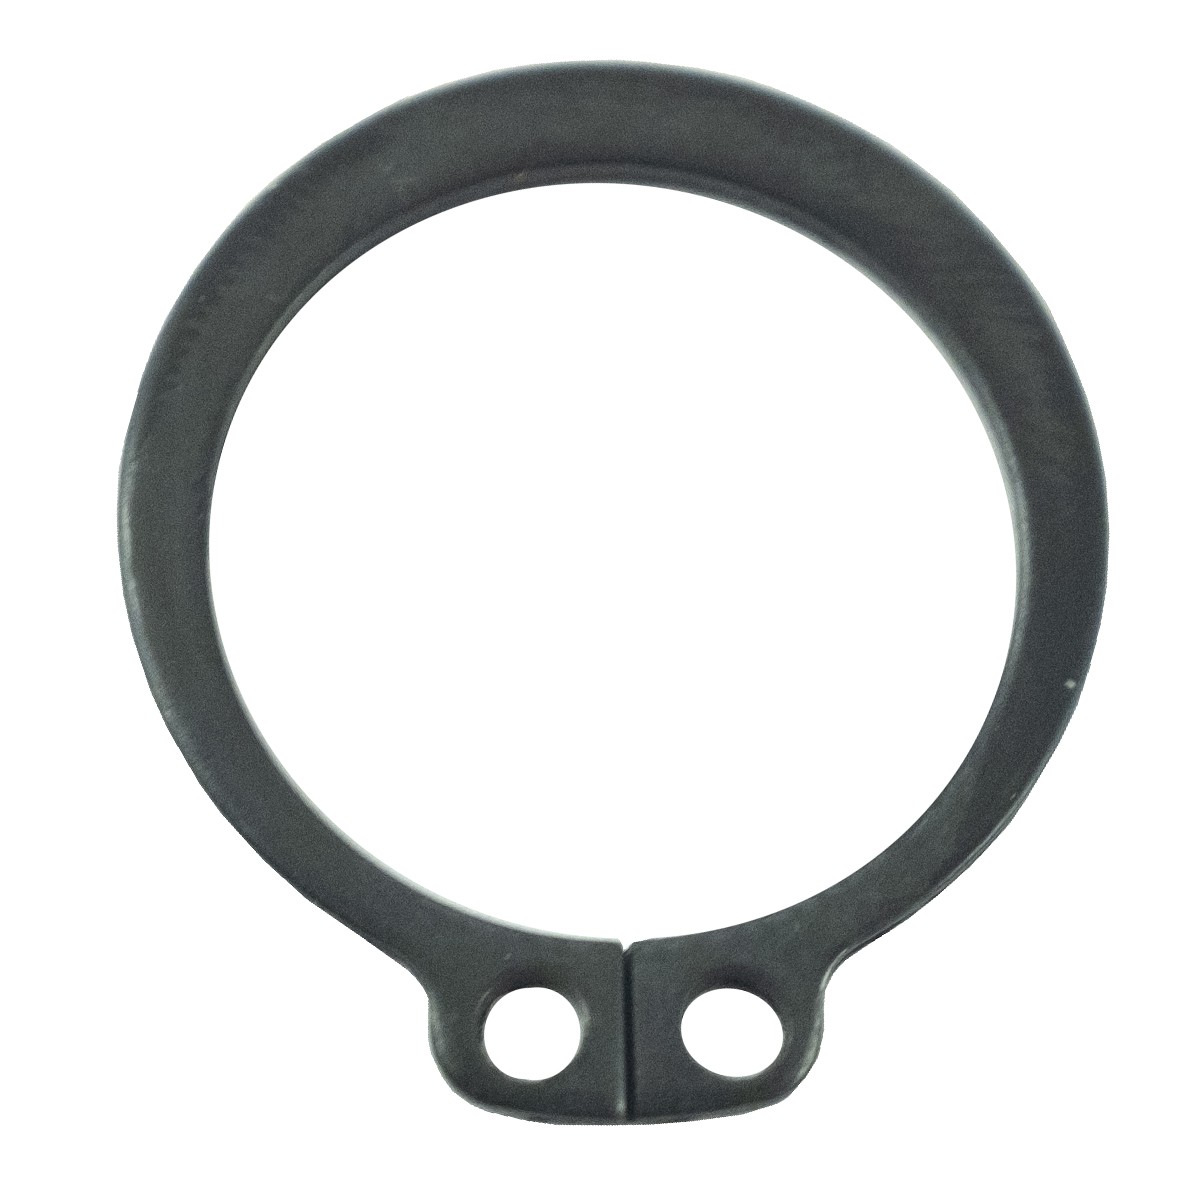 Snap ring Ø 20 mm / LS XJ25 / LS MT1.25 / LS MT3.35 / LS MT3.40 / LS MT3.50 / LS MT3.60 / S810020001 / 40029265